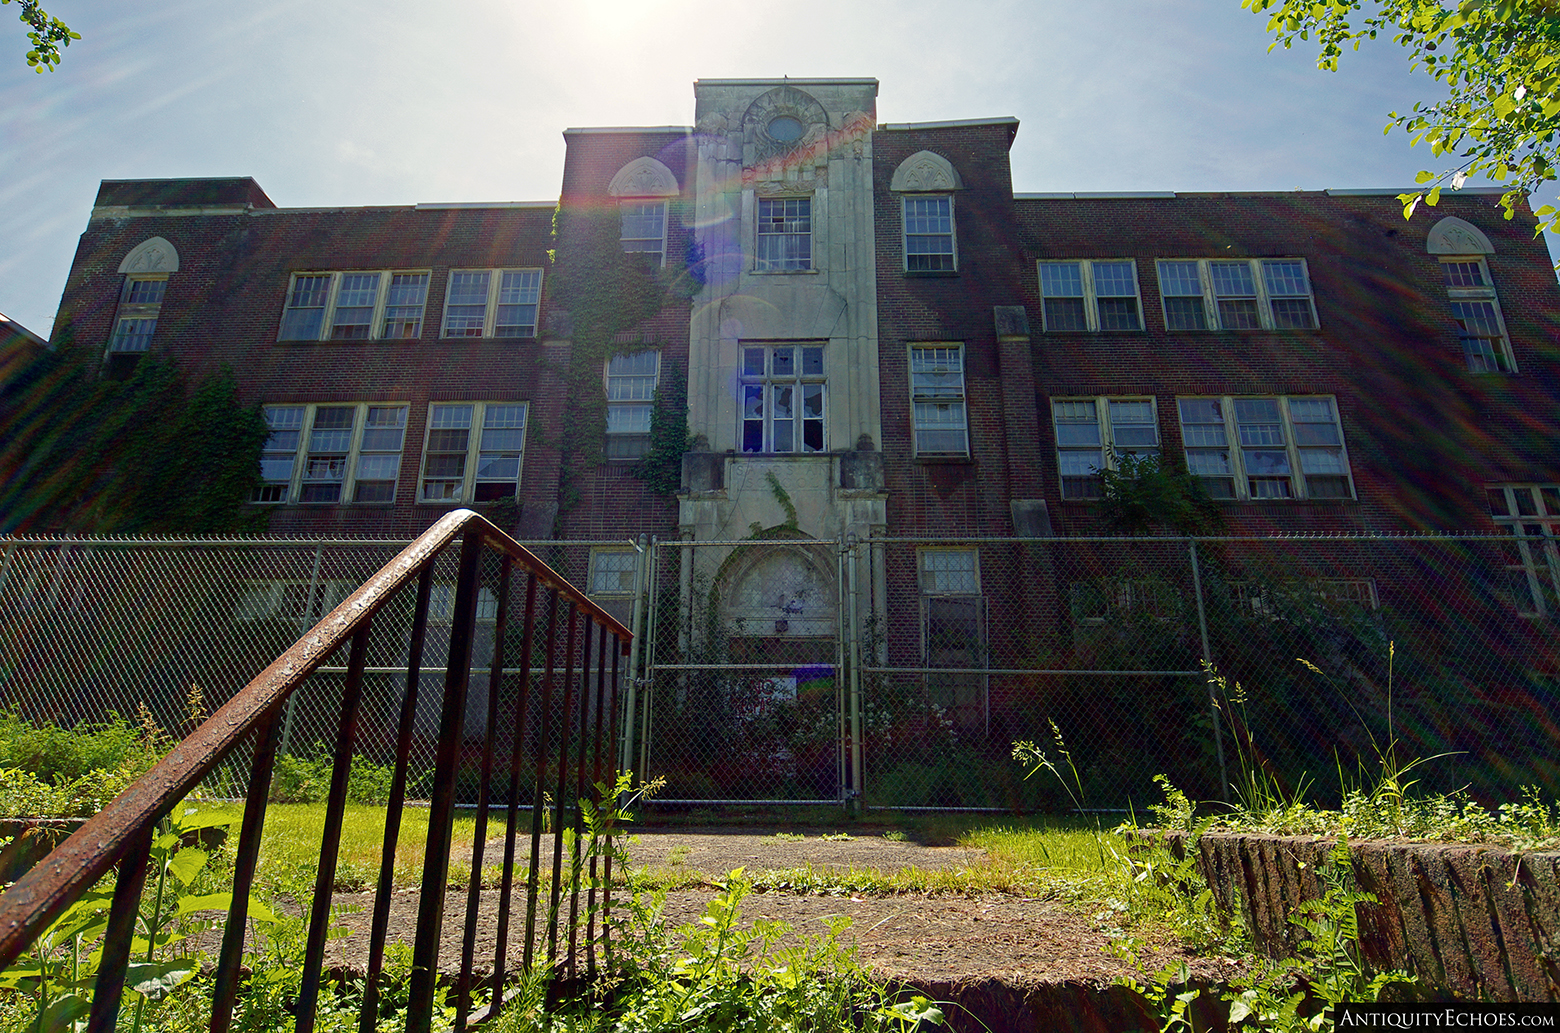 The Salesian School of Goshen, NY